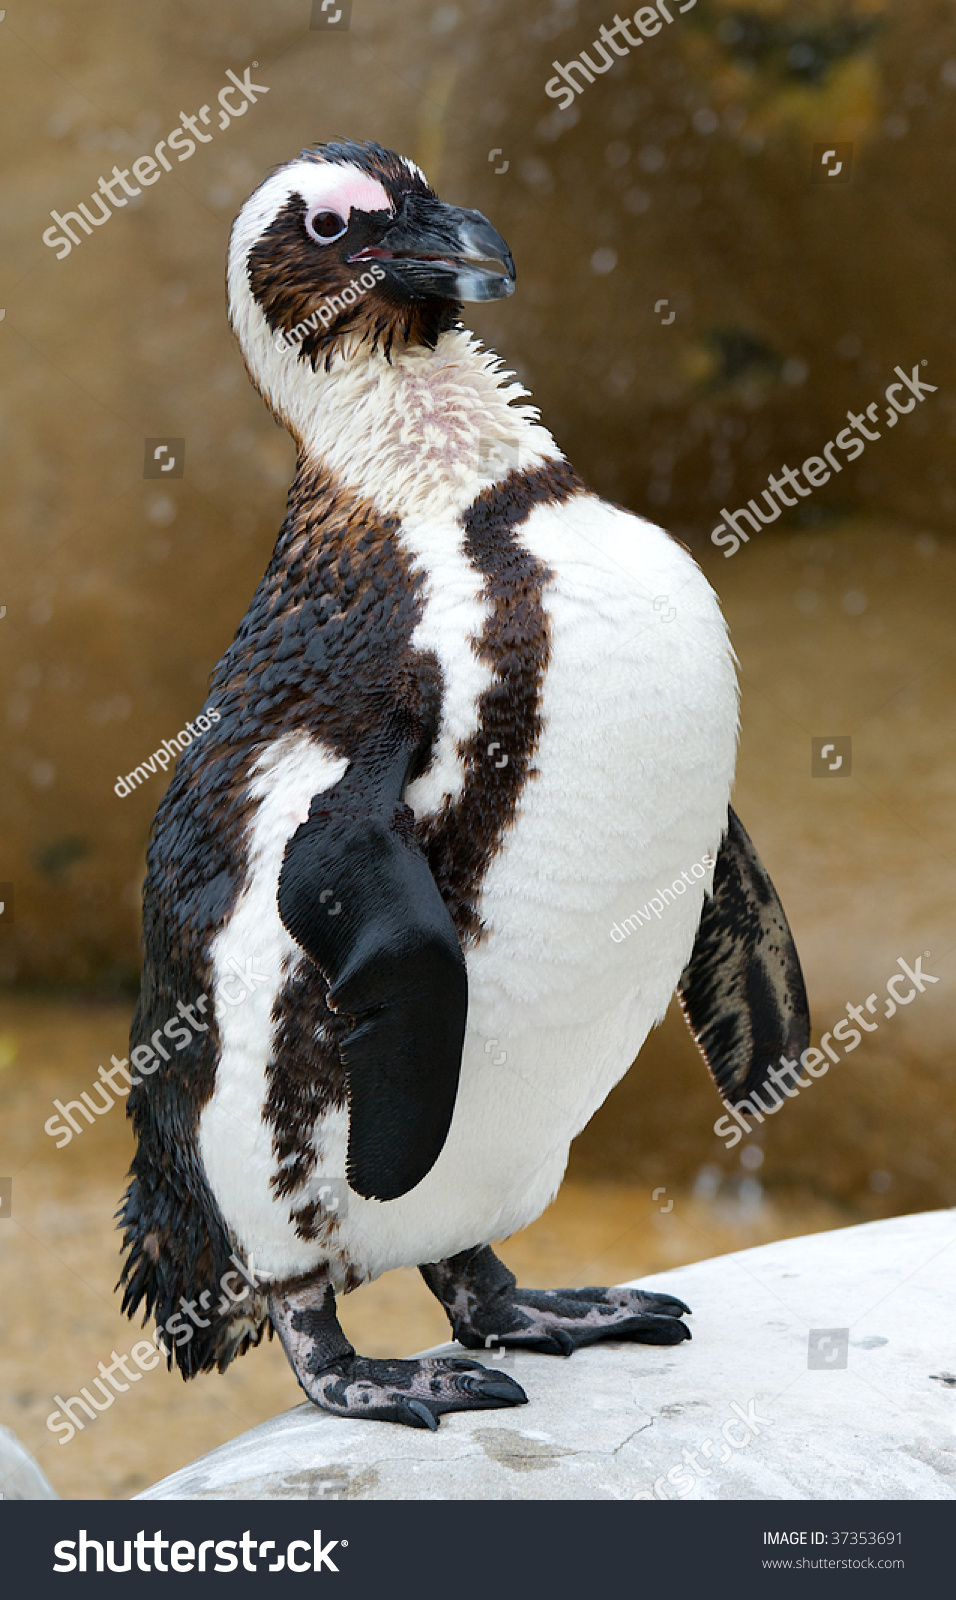 penguin webbed feet